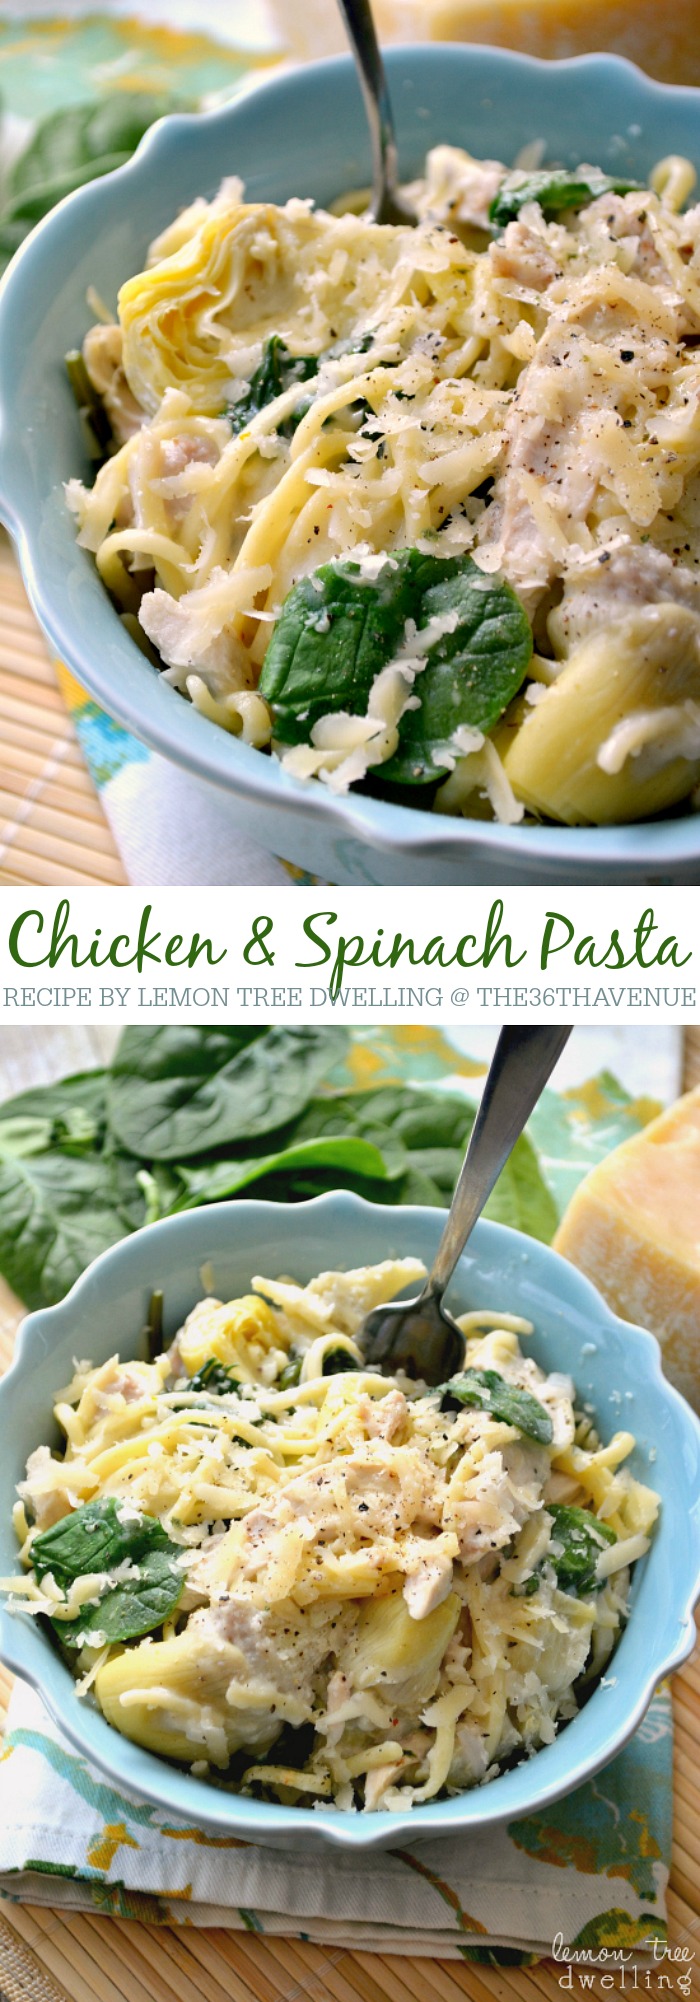 Pasta Recipe - Spinach Artichoke Chicken Pasta with all the flavors of the spinach artichoke dip.